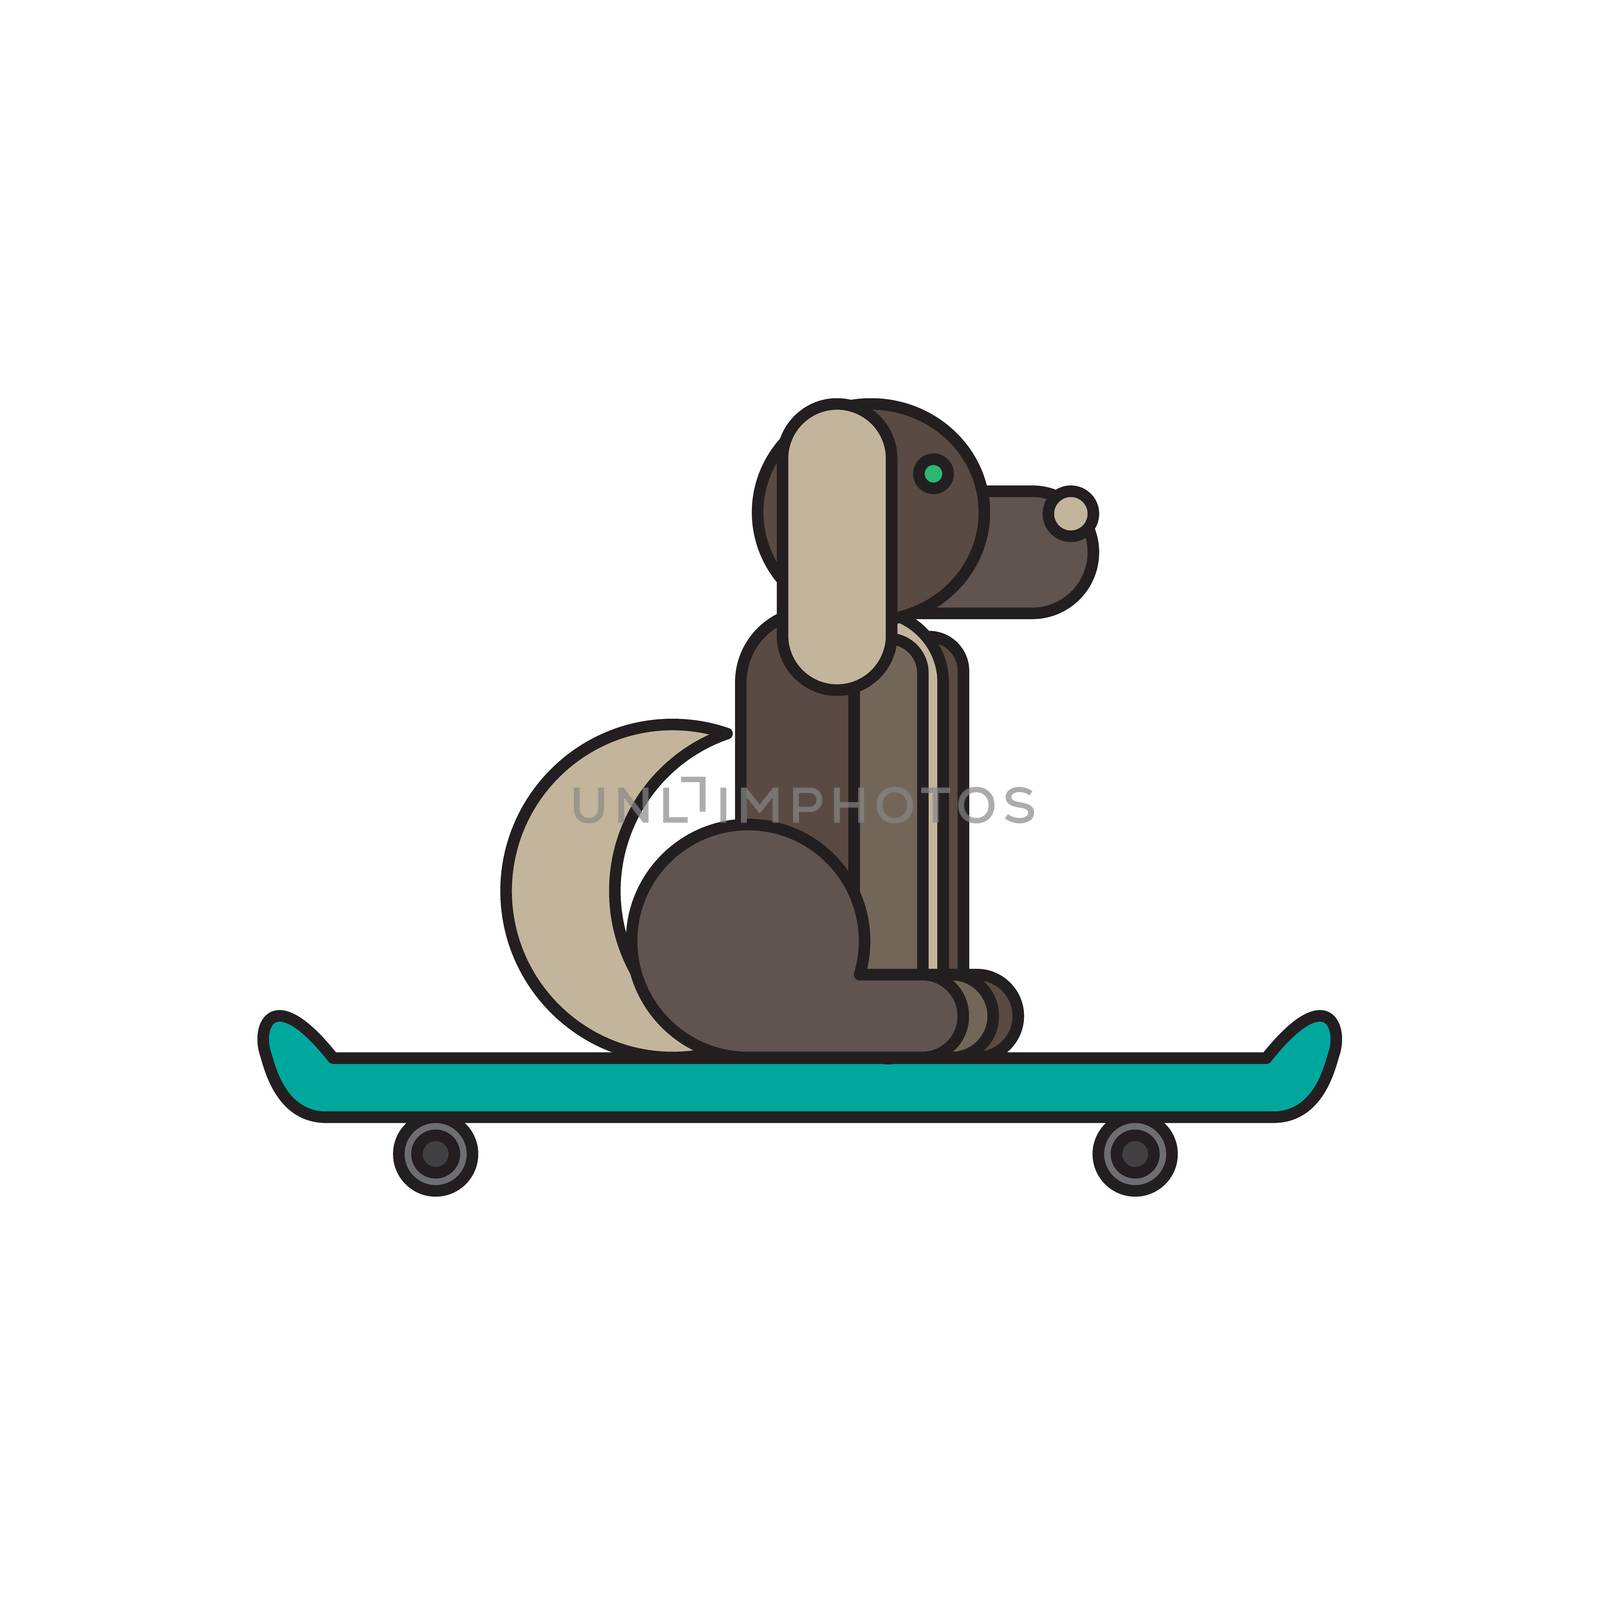 Dog sitting on a skateboard by barsrsind